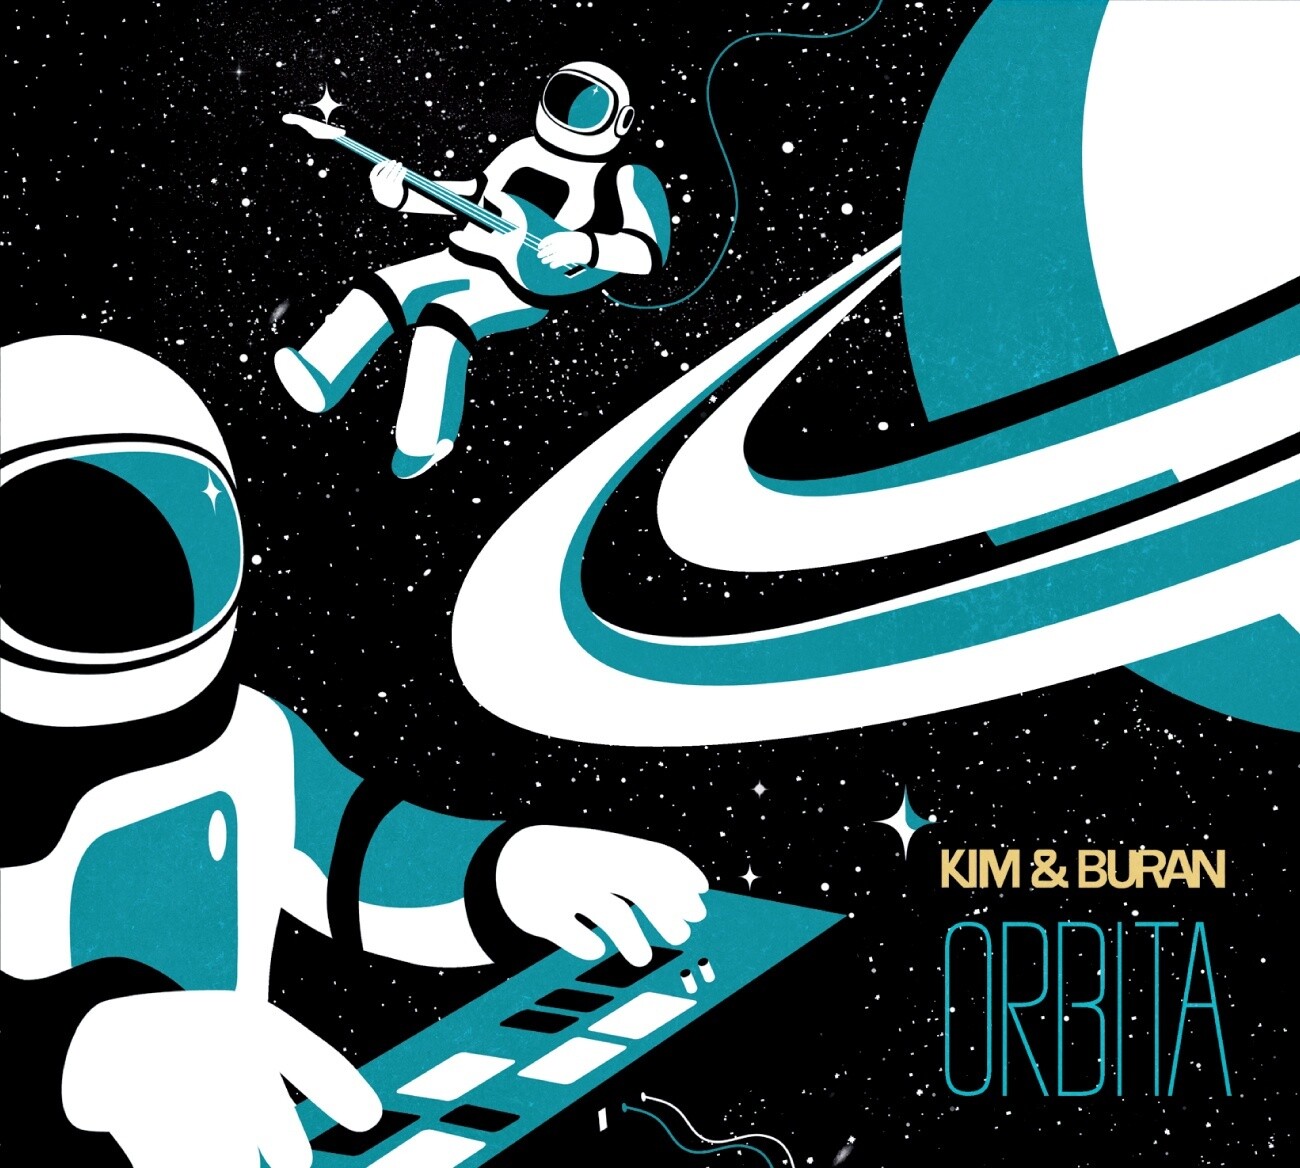 CD: KIM & BURAN — «Orbita» (2016/2022) [Limited Expanded Edition]